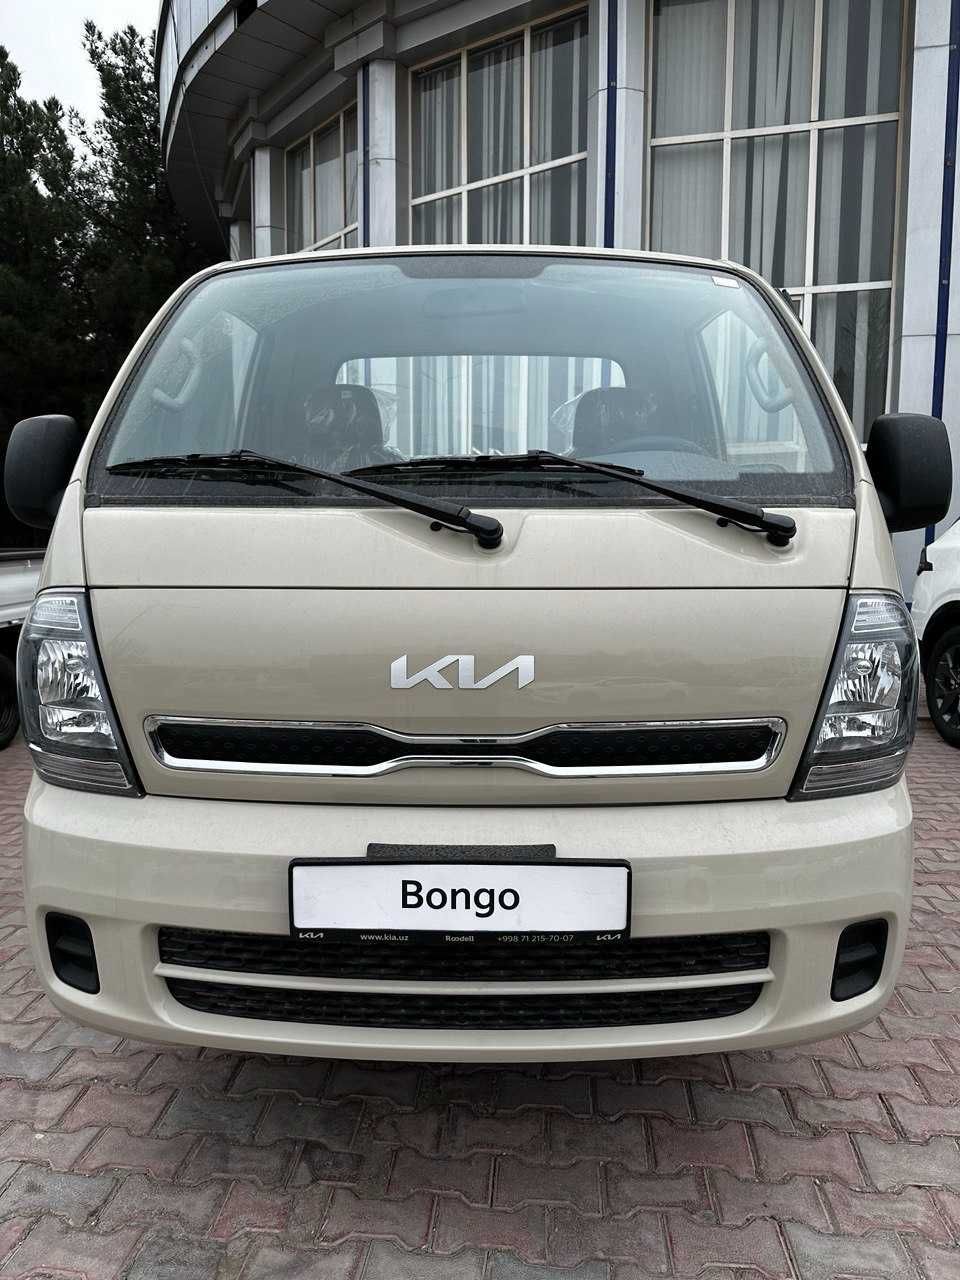 KIA Bongo Standart cabin без кузов с автосалона